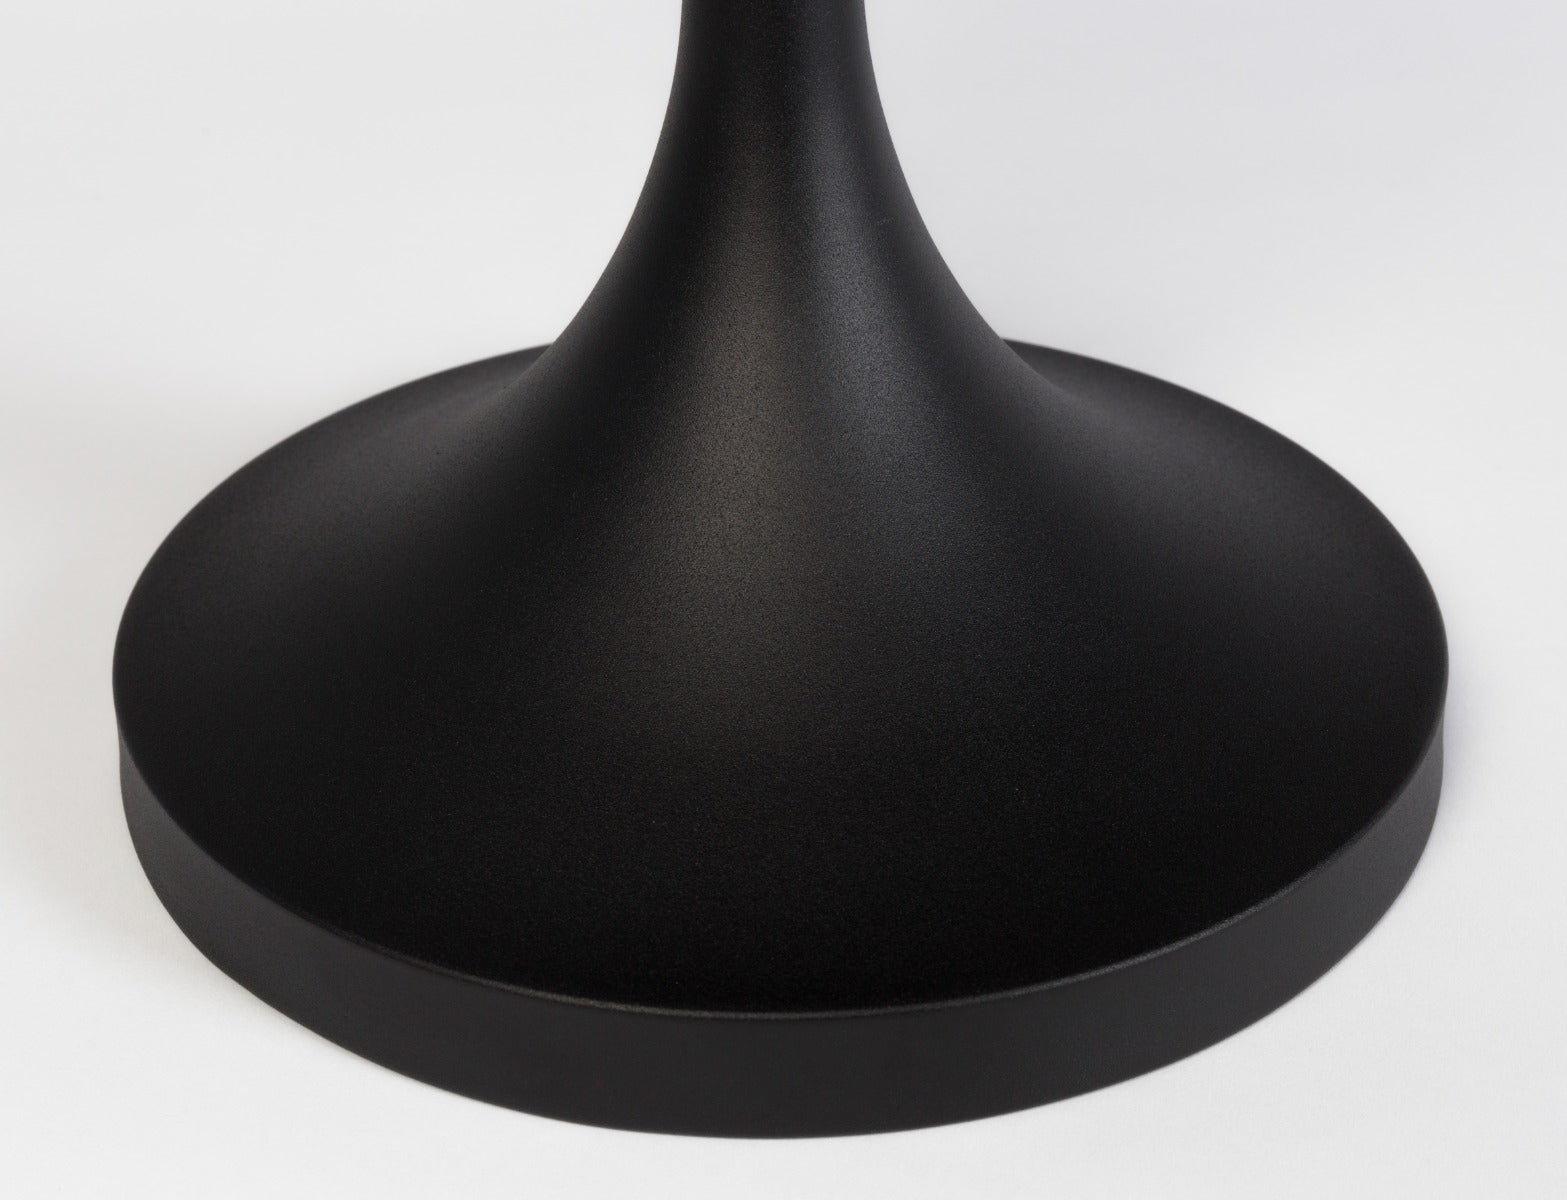 JASON table black, Zuiver, Eye on Design